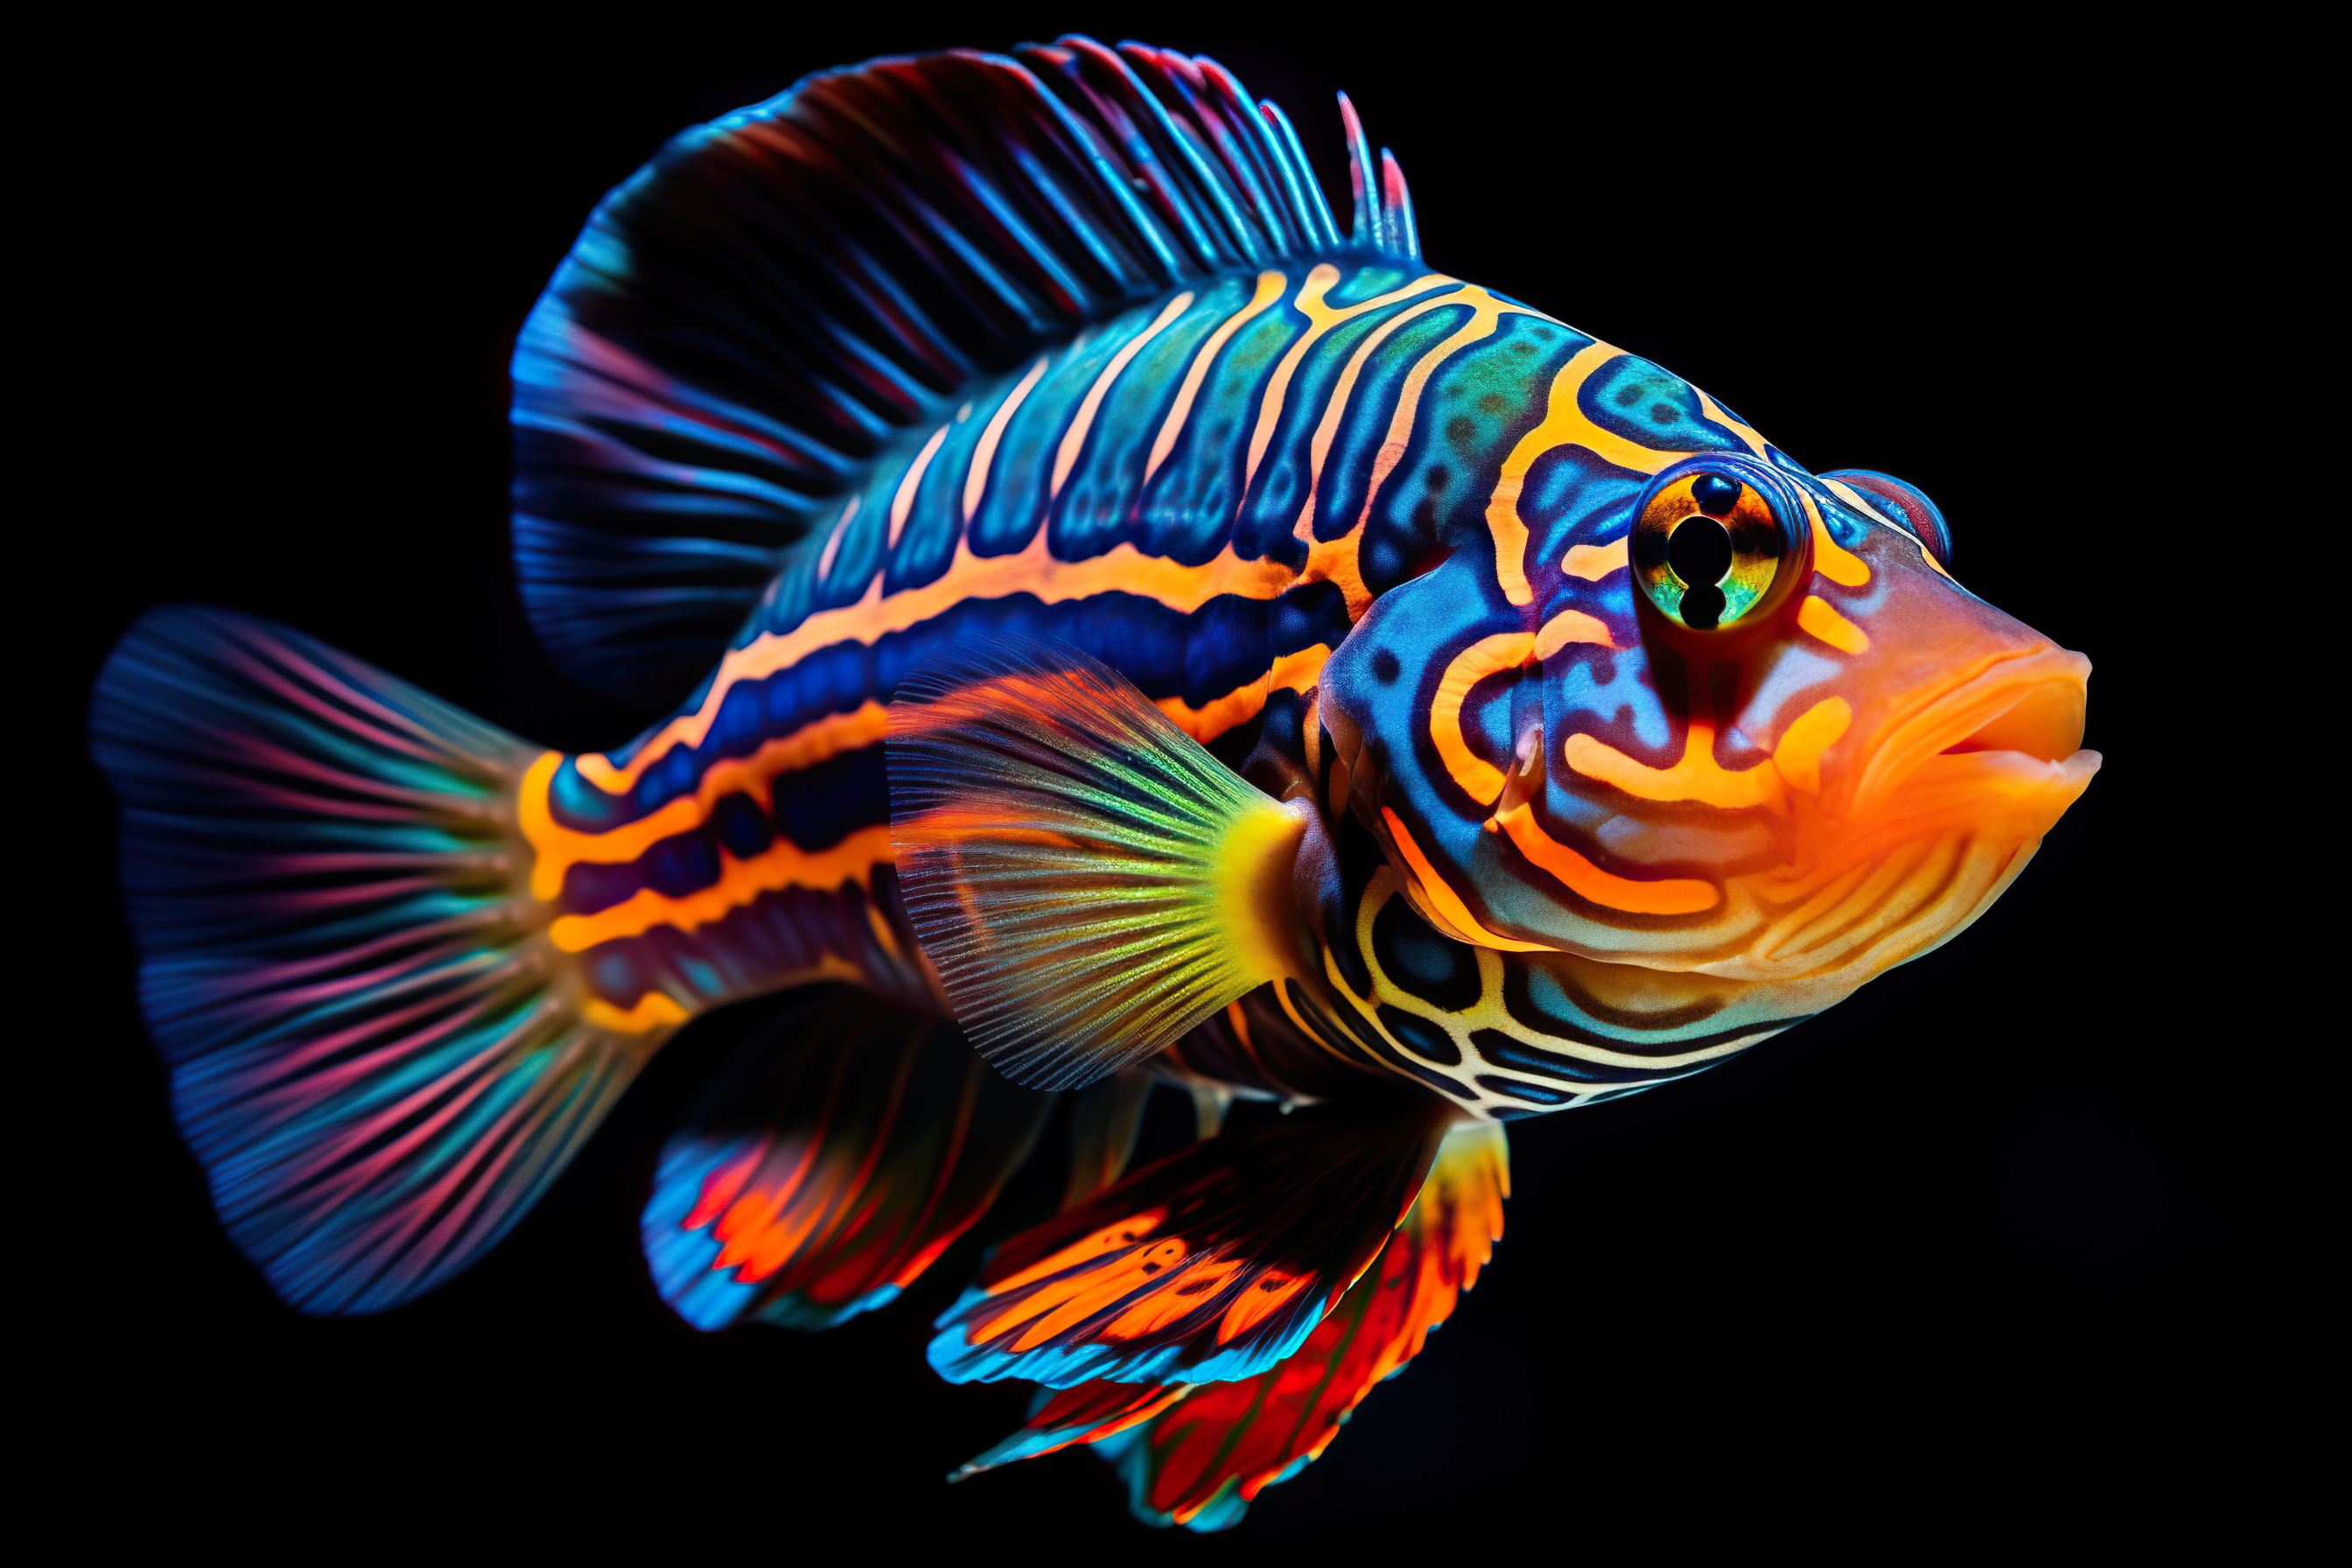 Close shot of a colorful fish